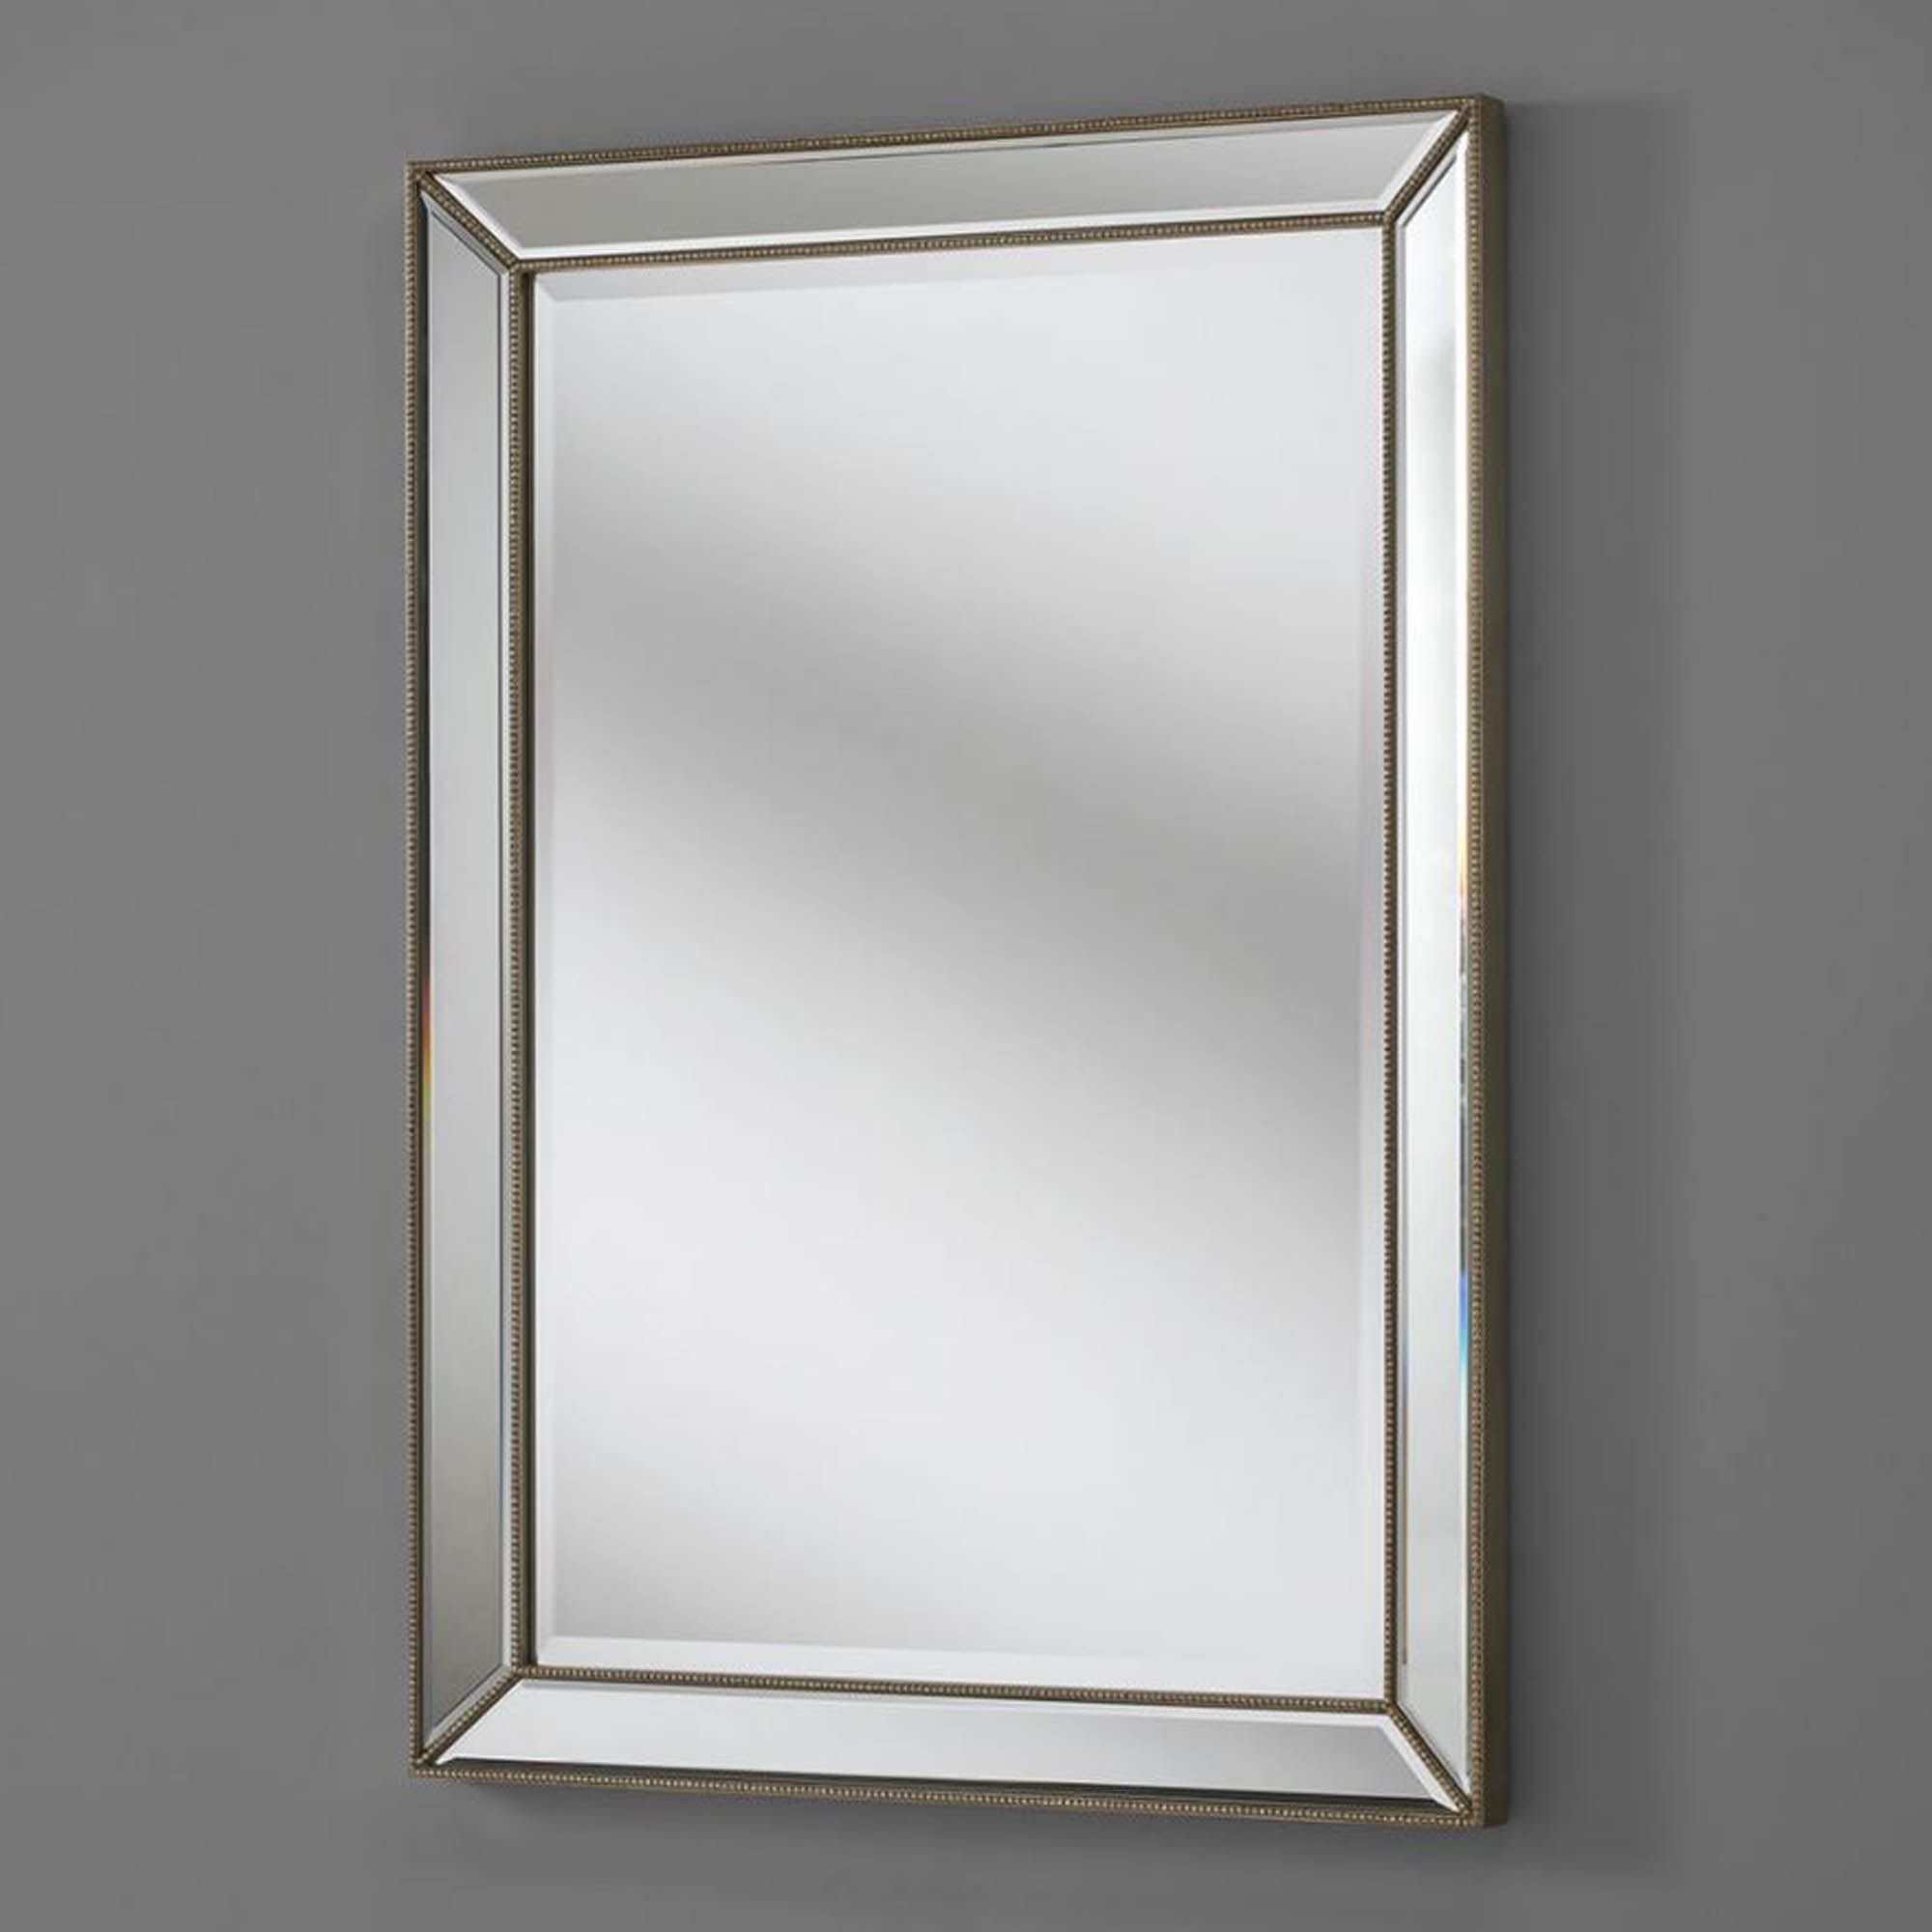 Silver Venetian Rectangular Wall Mirror | Decor | Homesdirect365 With Regard To Rectangular Grid Wall Mirrors (View 1 of 15)